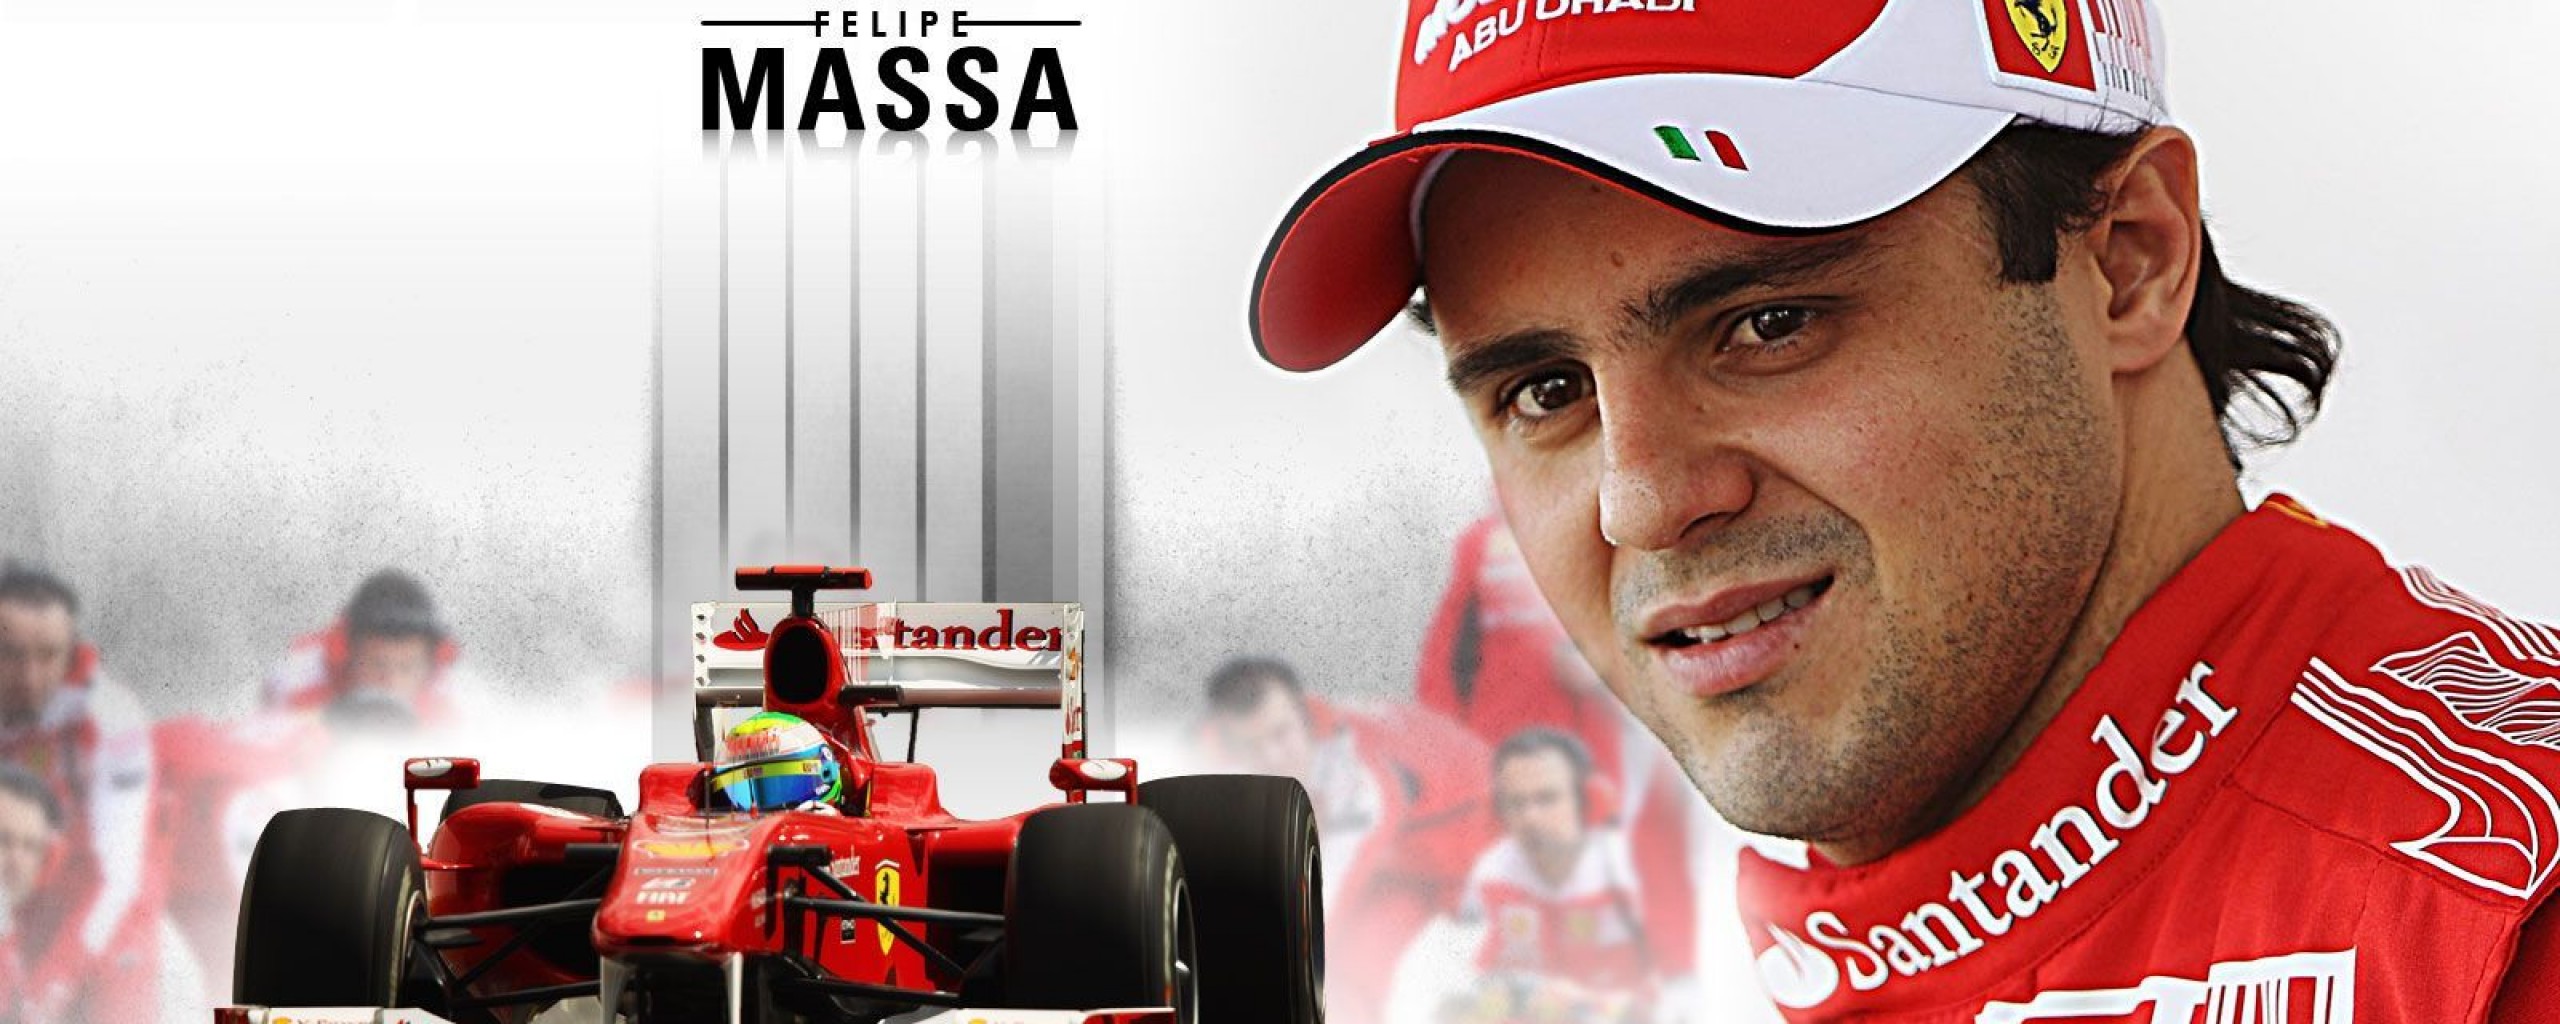 Felipe Massa HD Racing Wallpaper High Quality